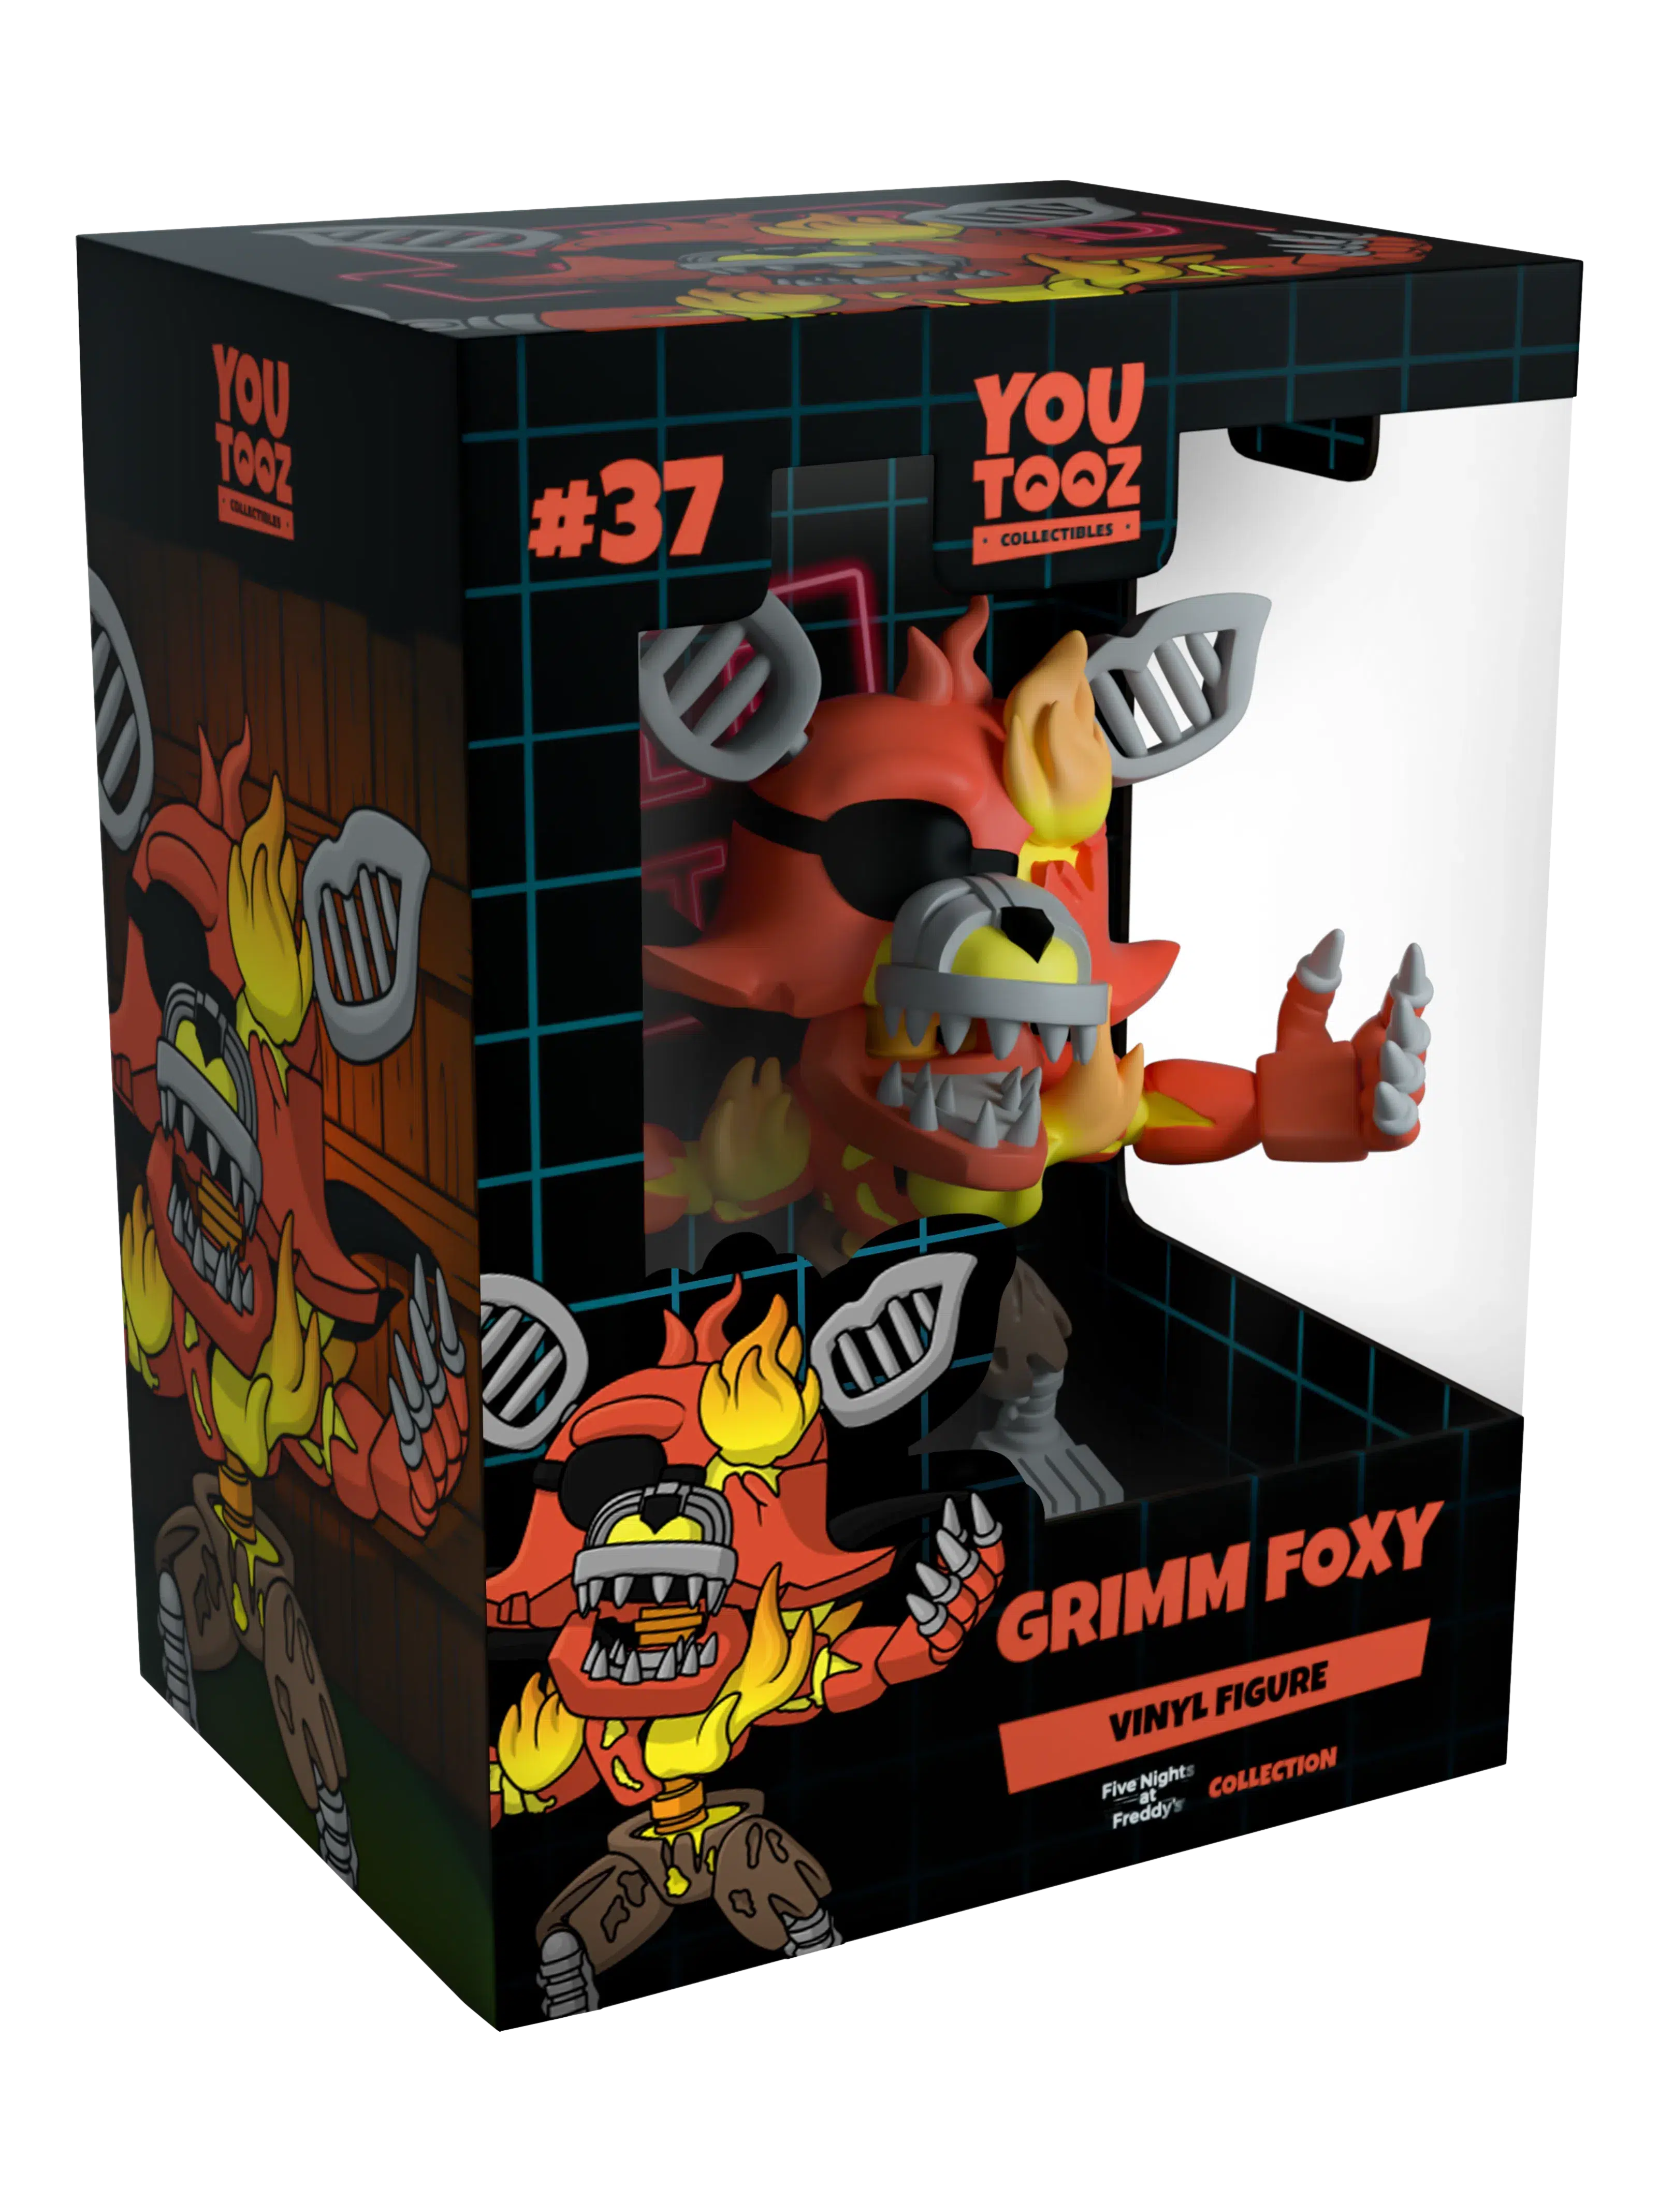 Five Nights at Freddy's: Grimm Foxy: #37: YouTooz